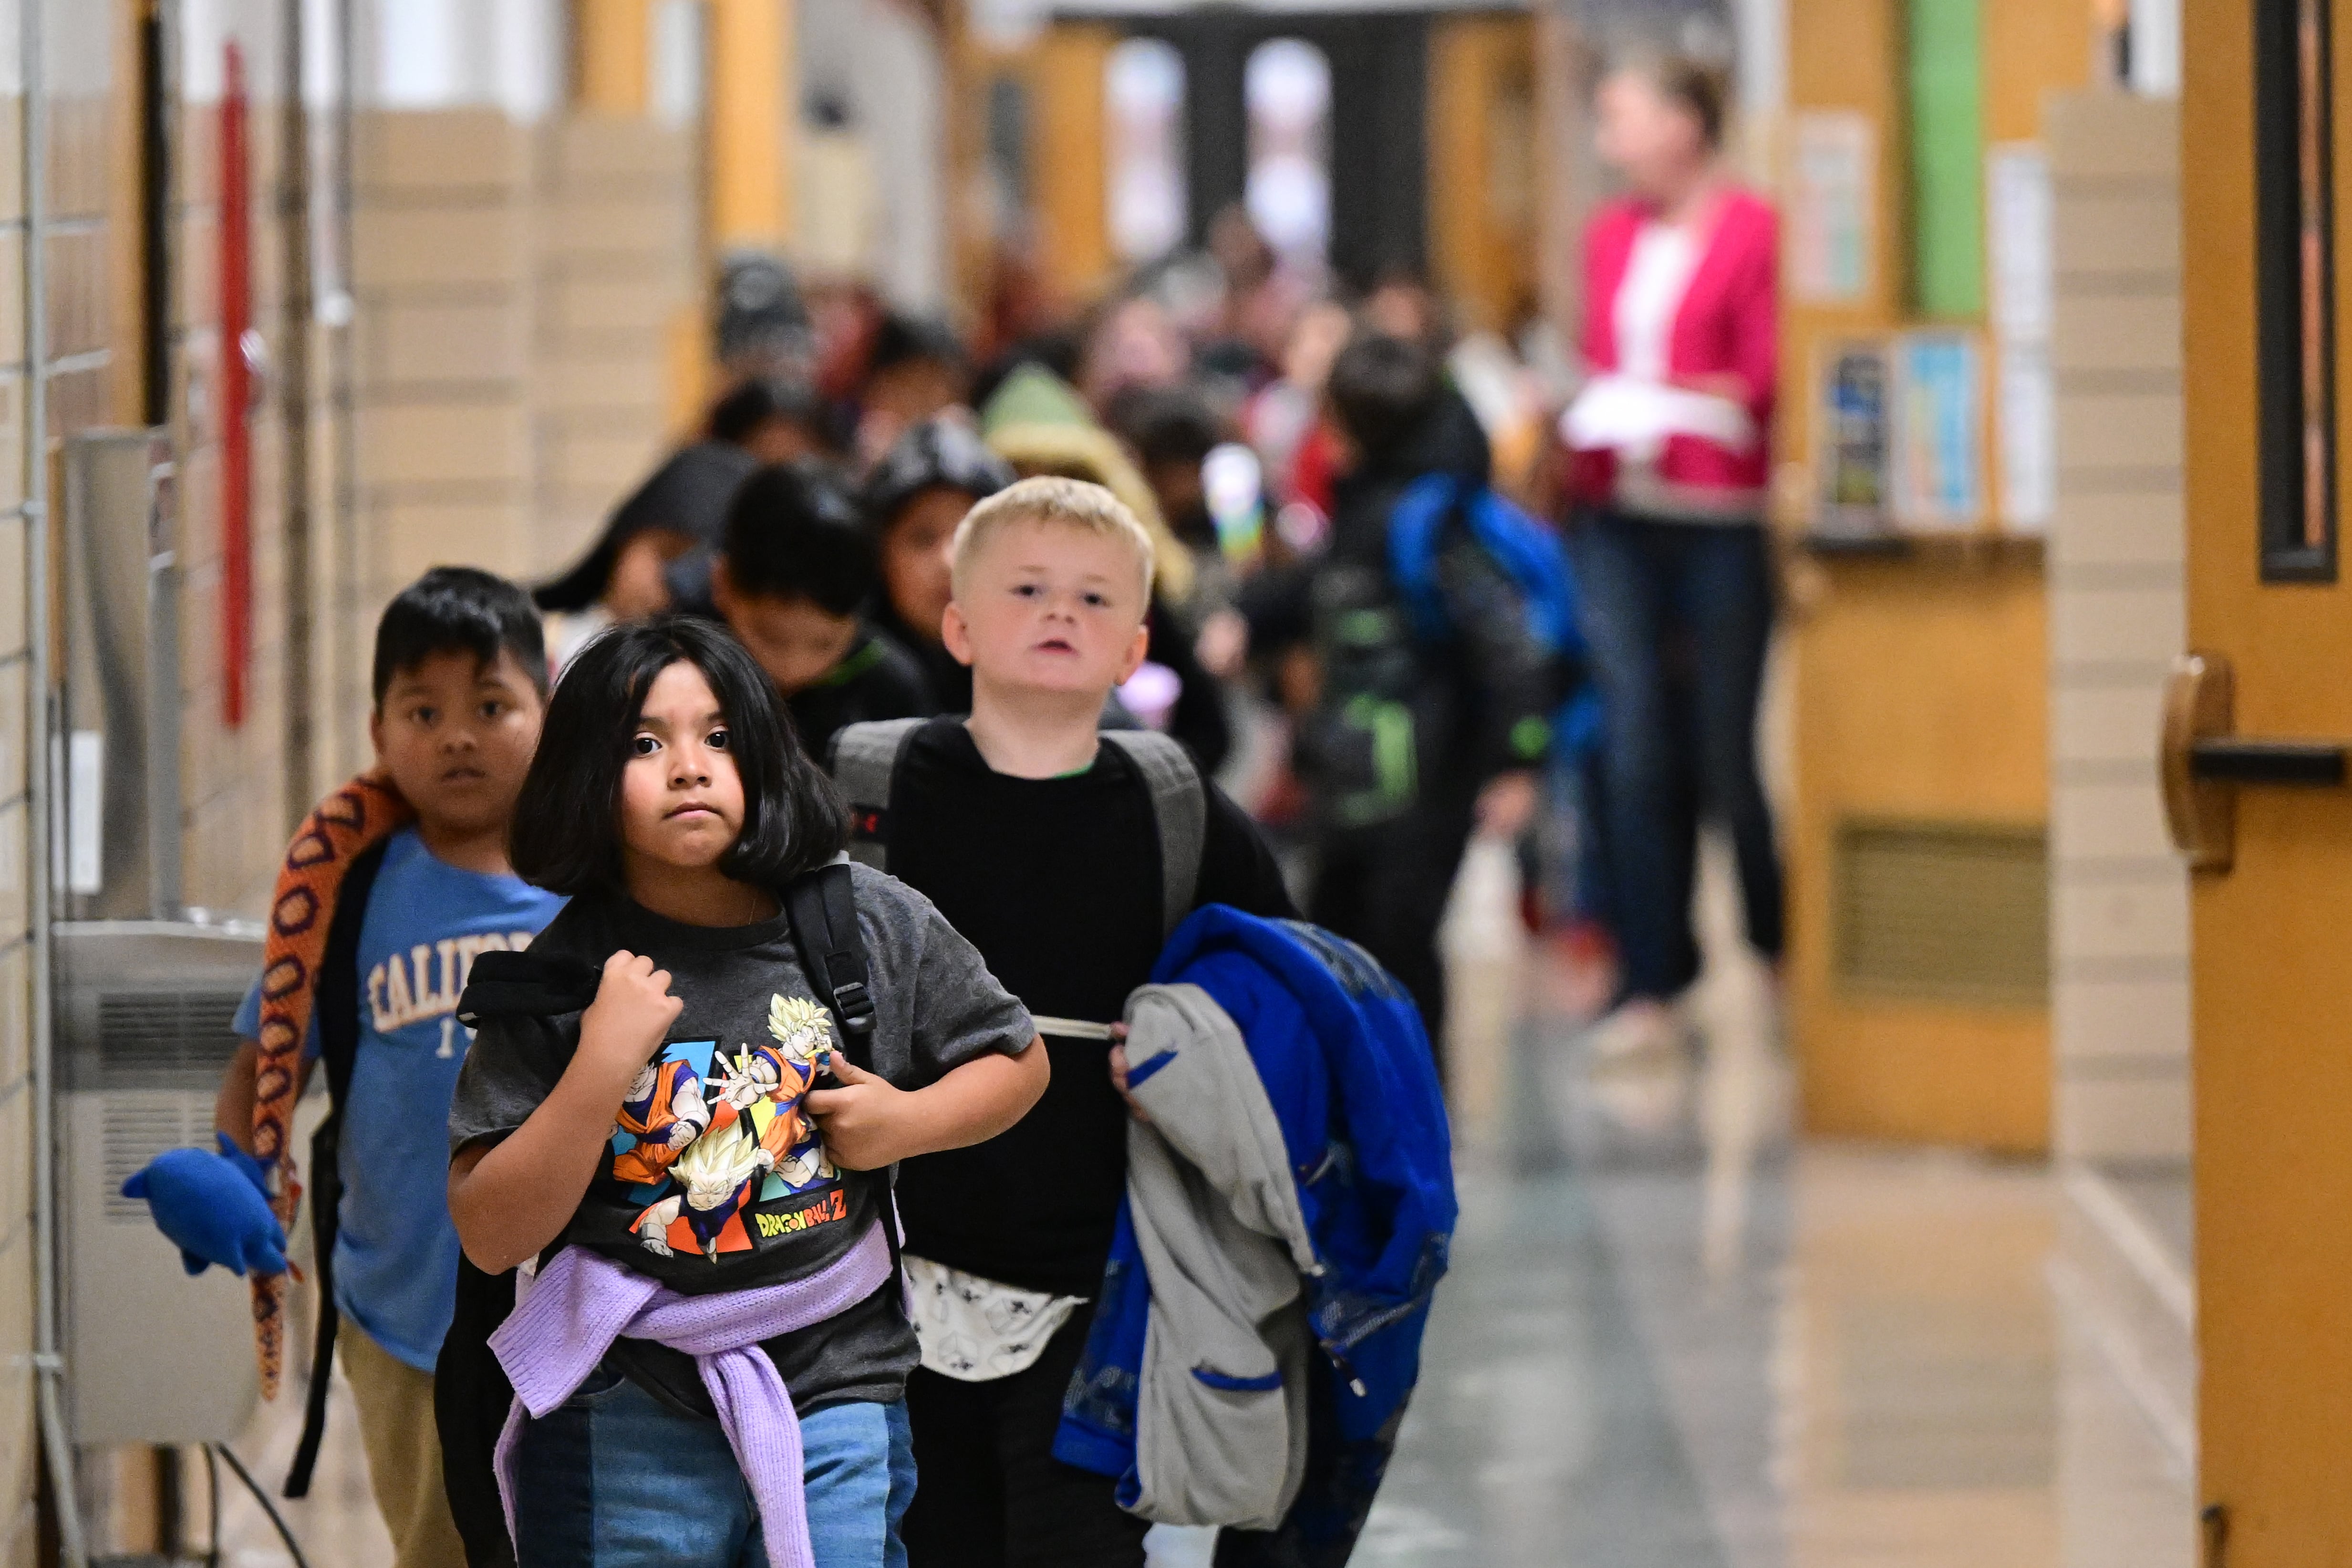 Young students walk through an elementary school hallway.